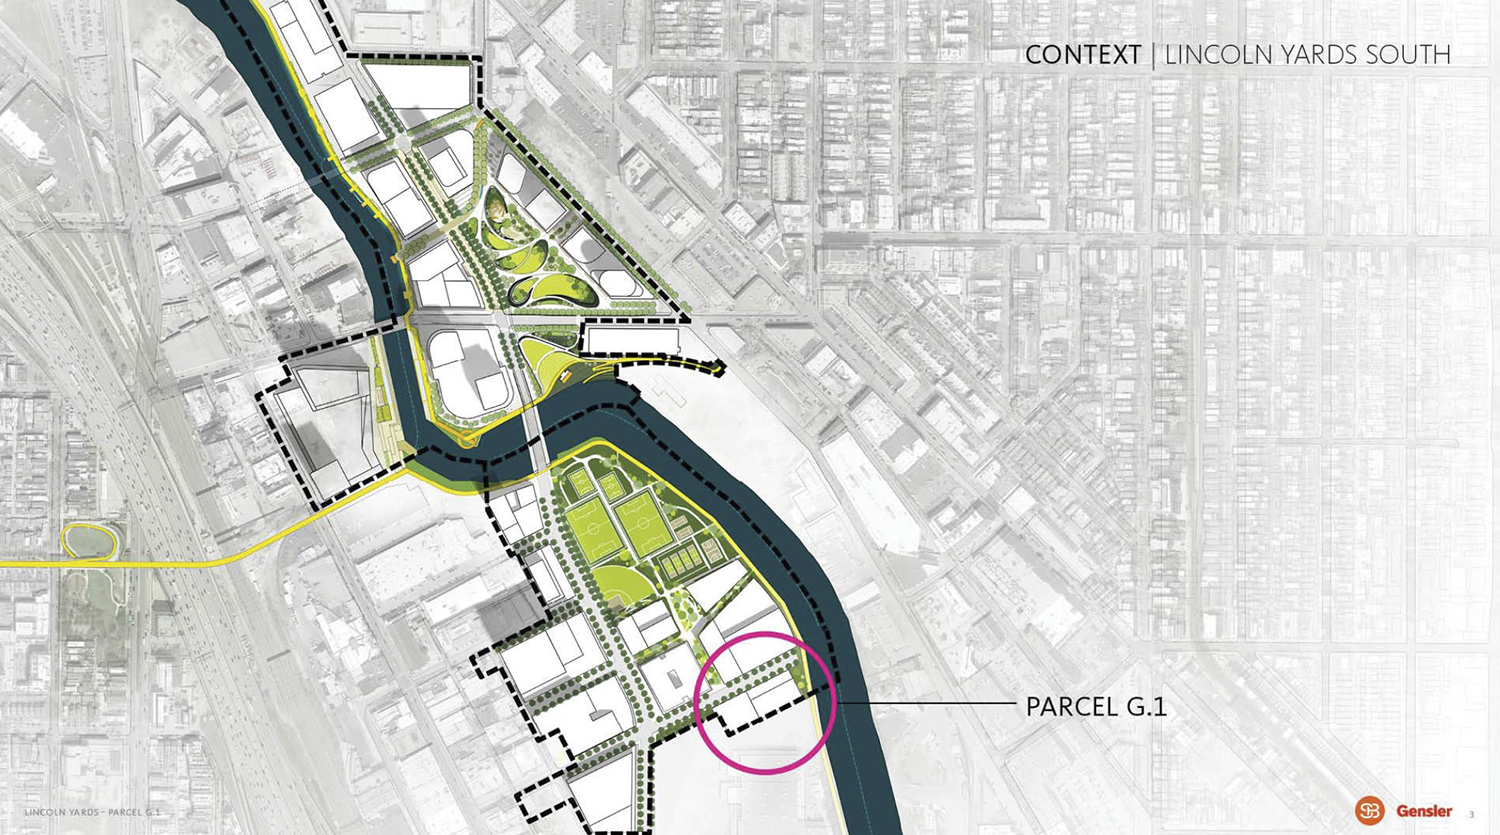 Lincoln Yards Site Plan Highlighting Parcel G.1. Diagram by Gensler